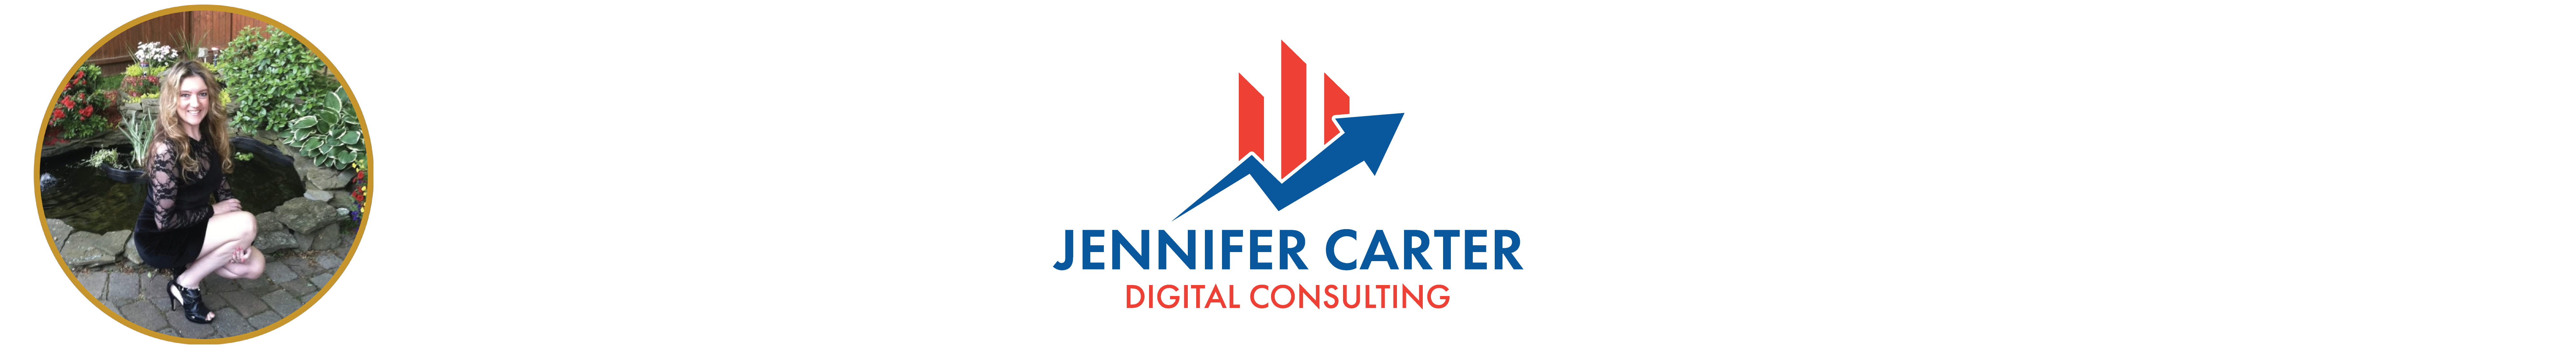 Jennifer Carter Digital Consulting